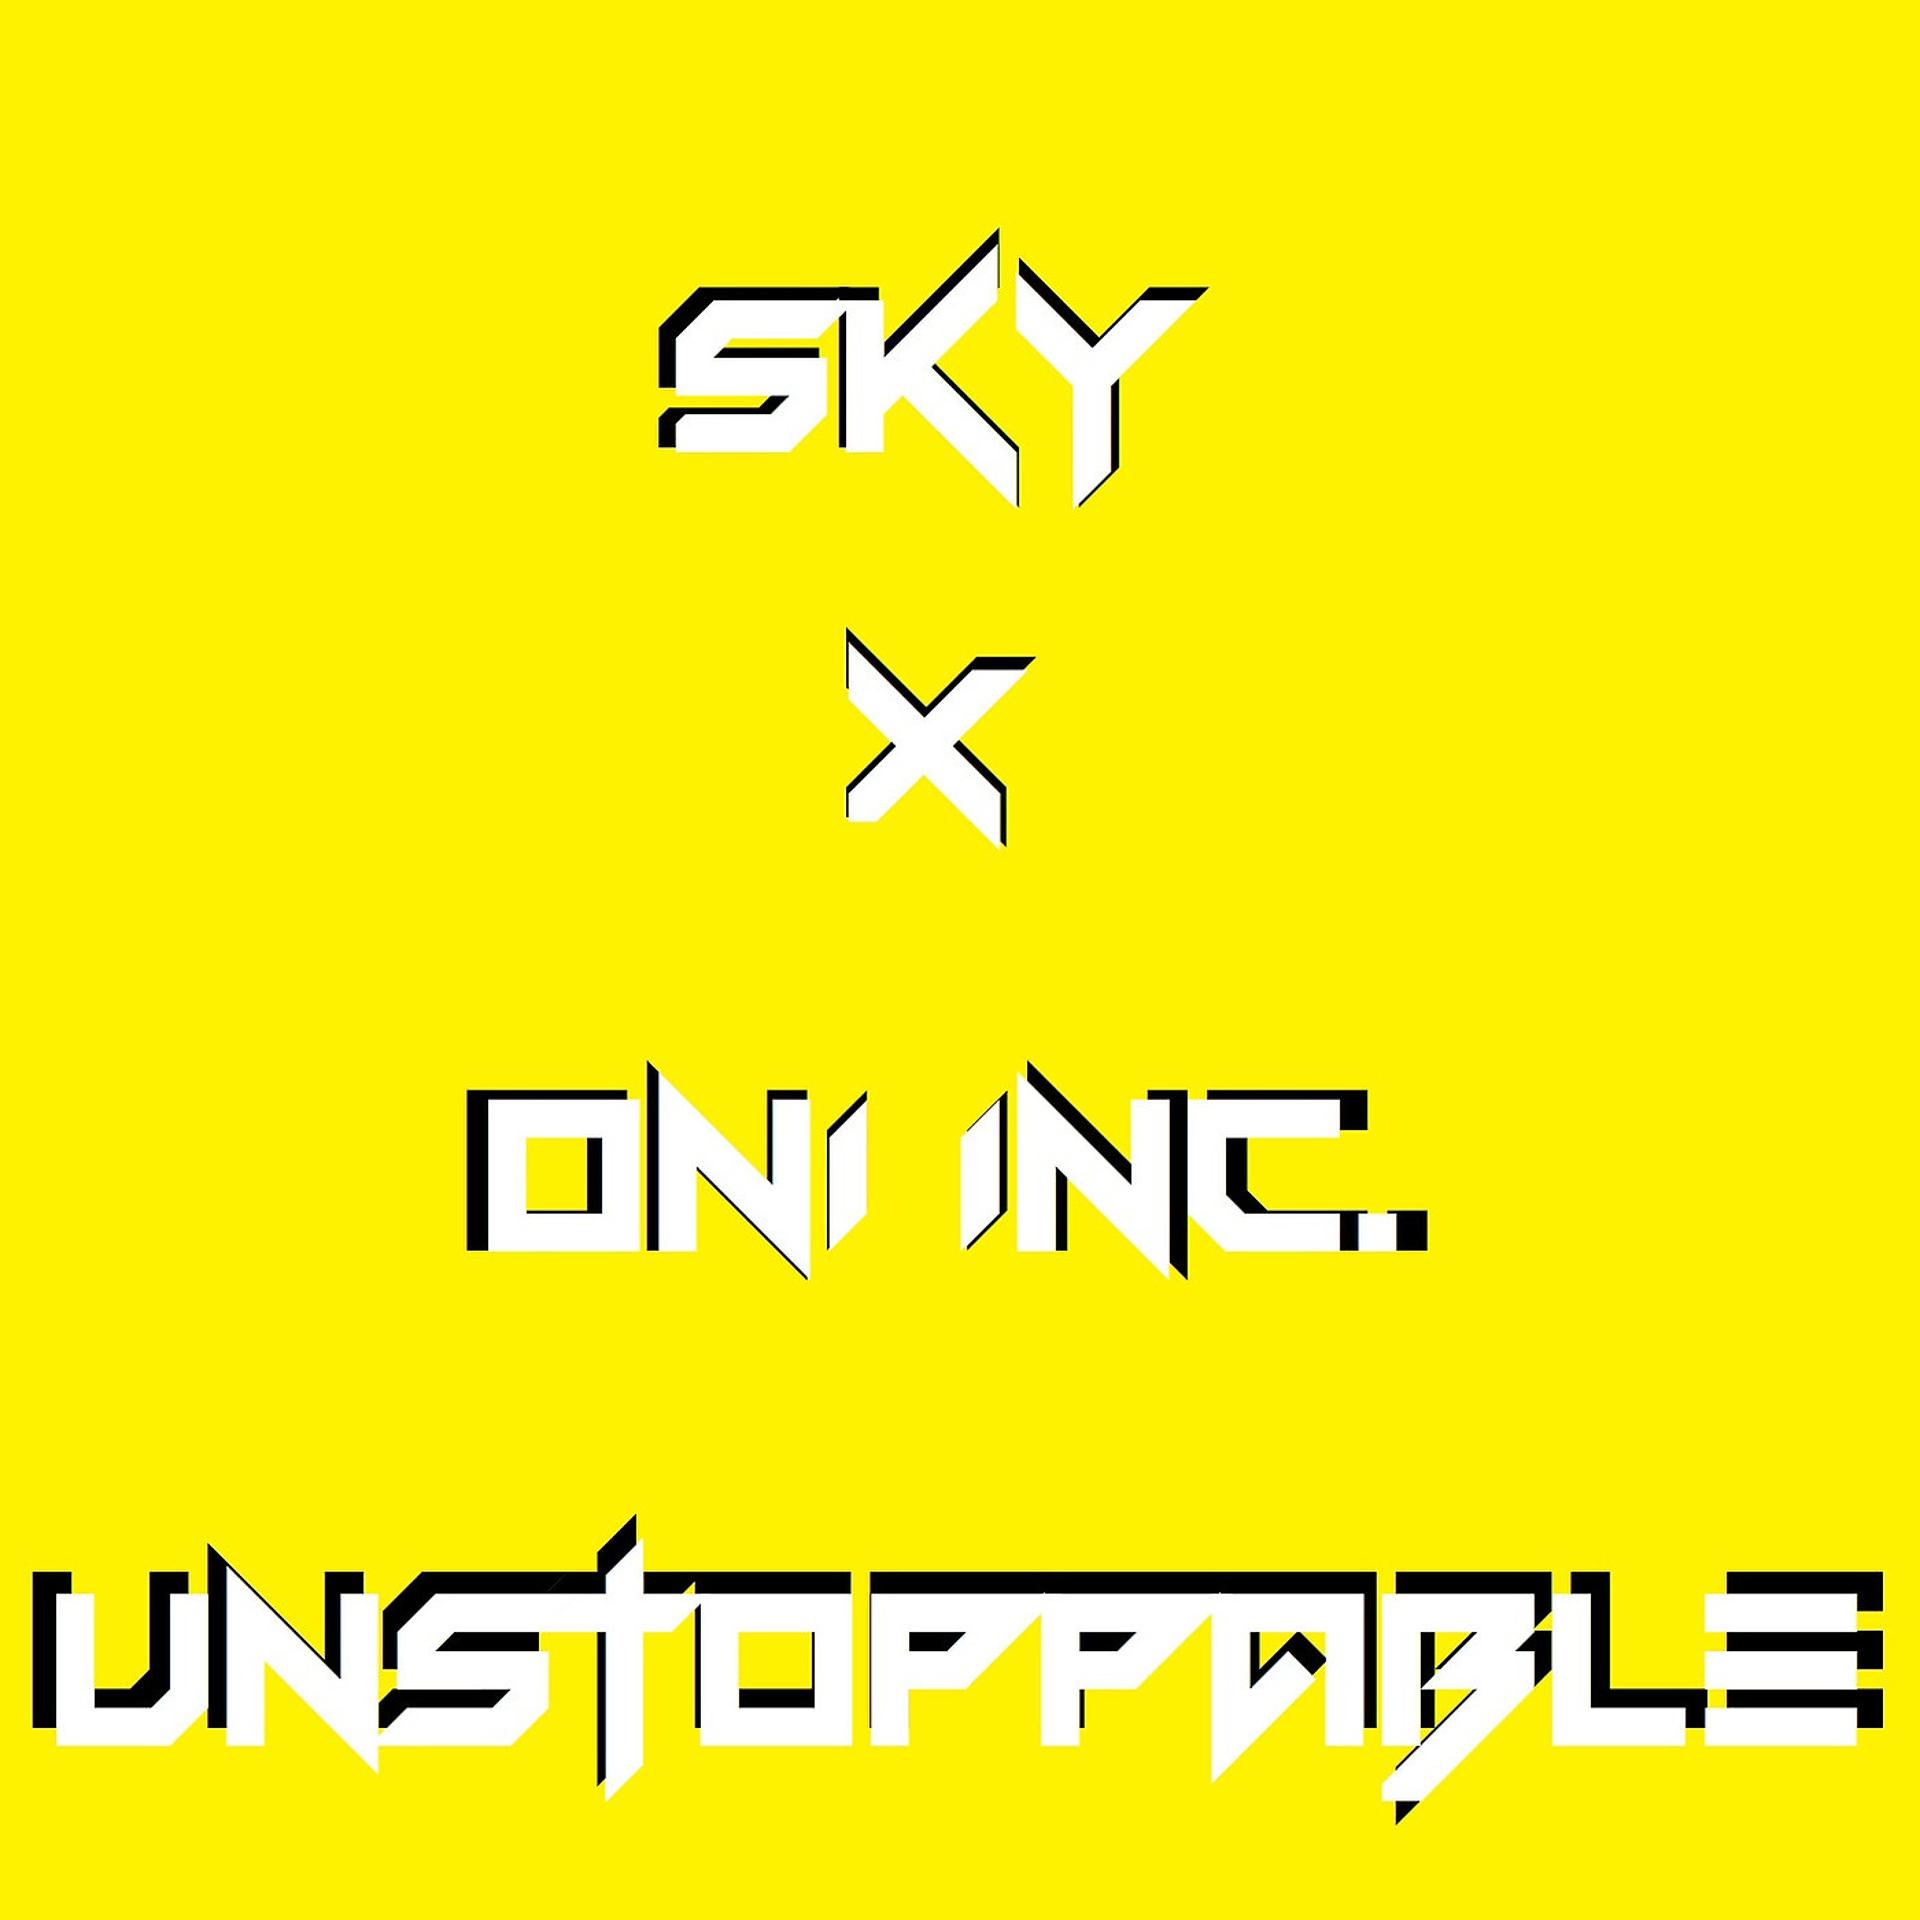 Постер альбома Unstoppable